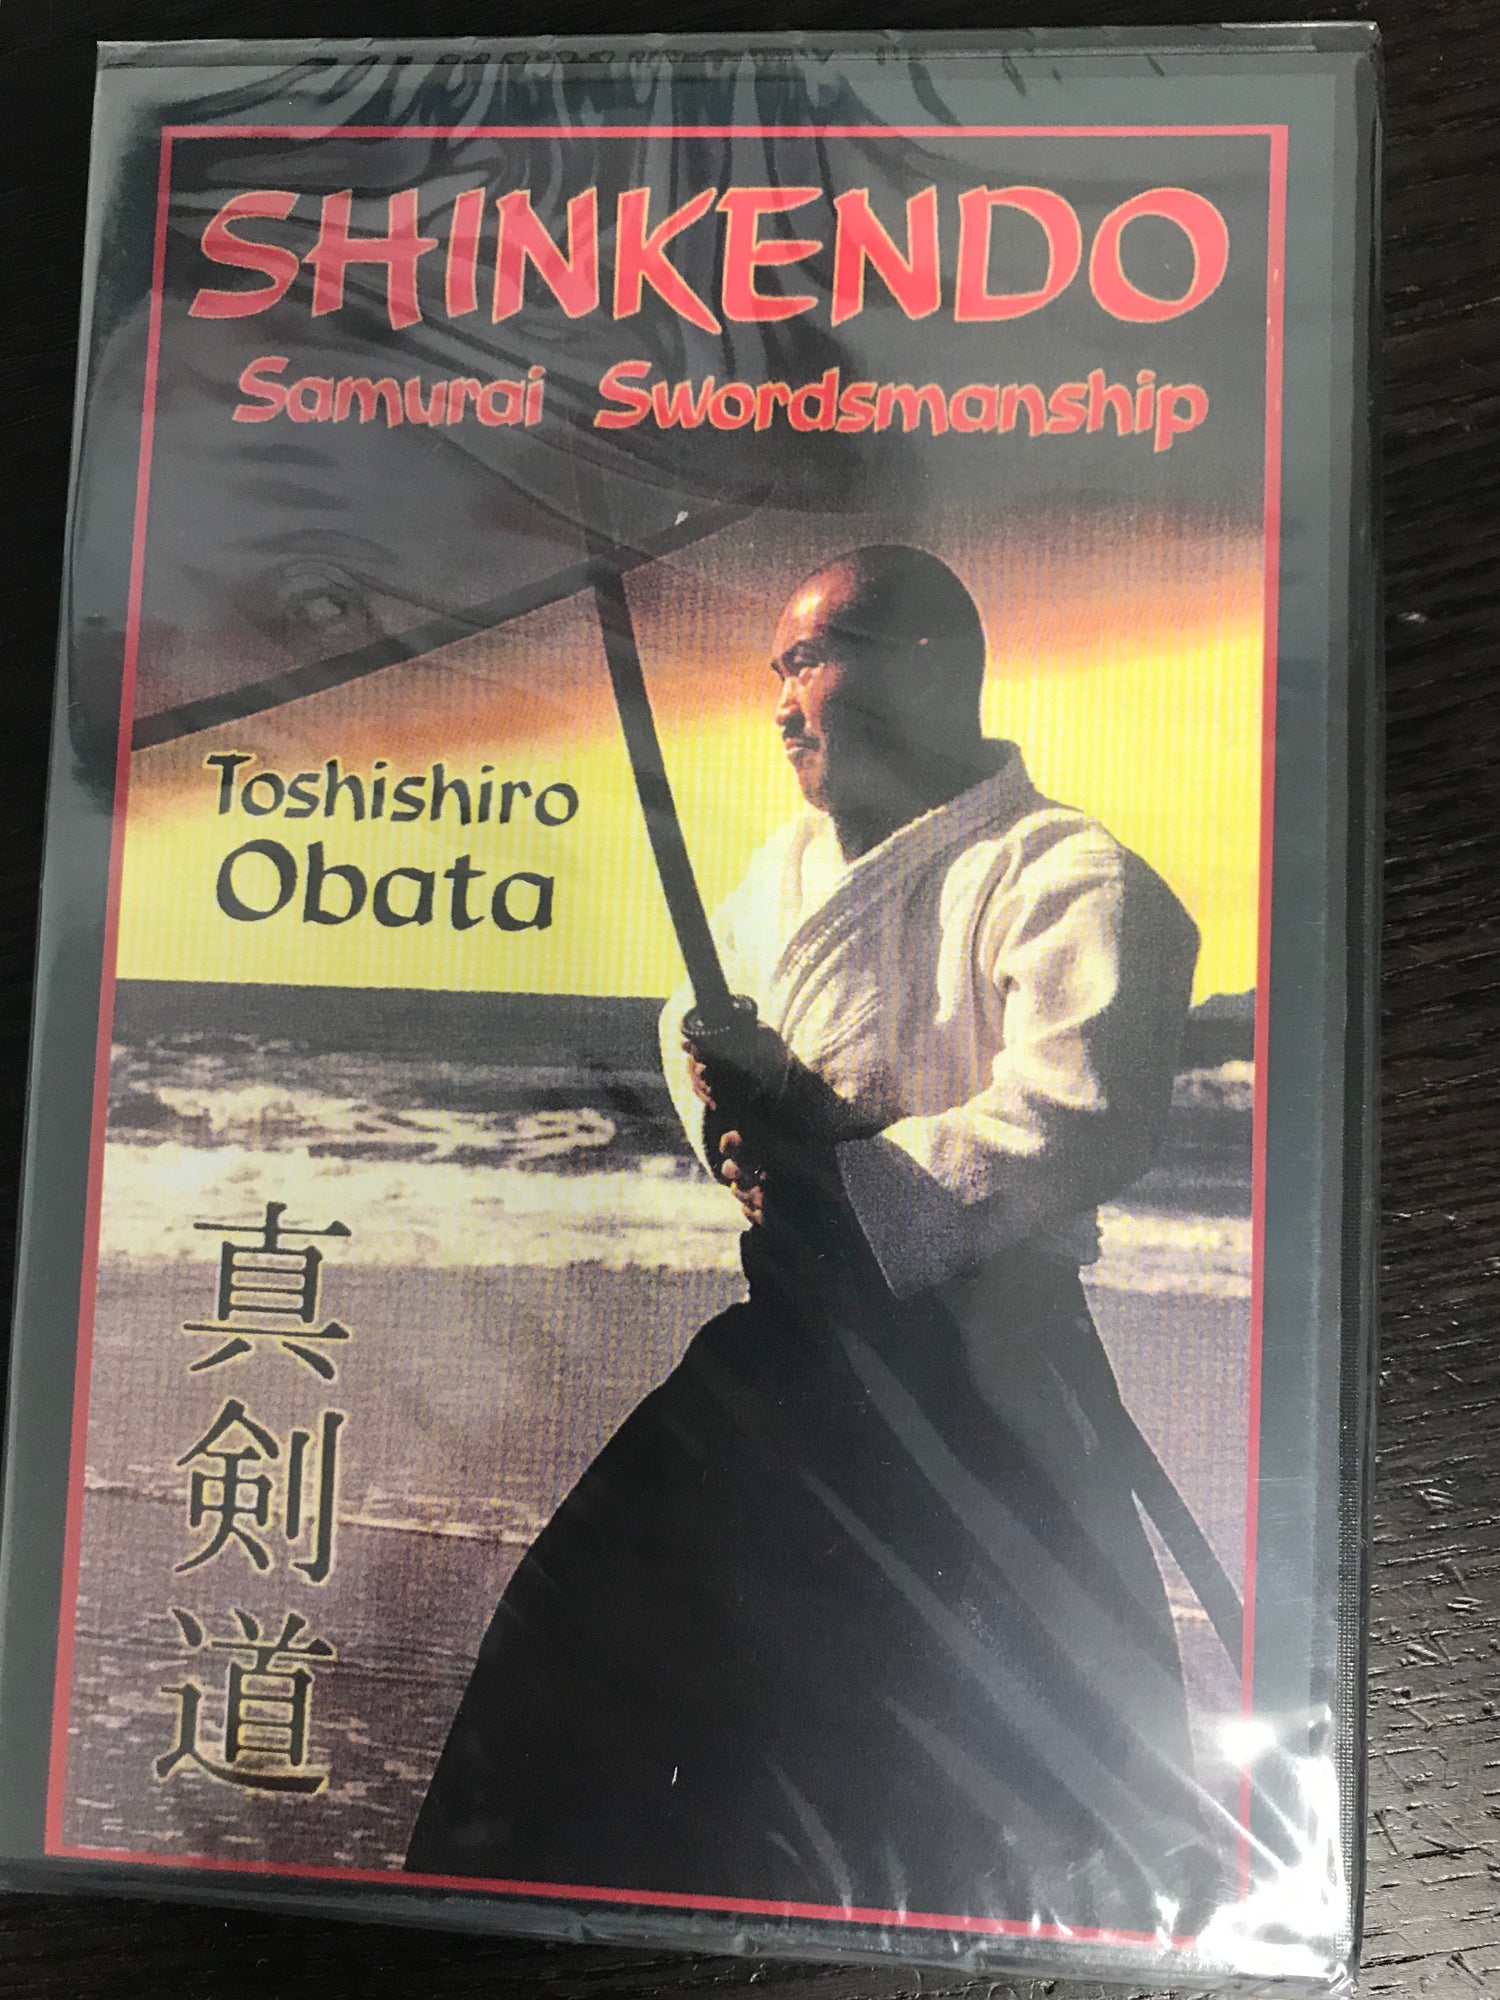 Shinkendo Samurai Swordsmanship DVD by Toshishiro Obata - Budovideos Inc